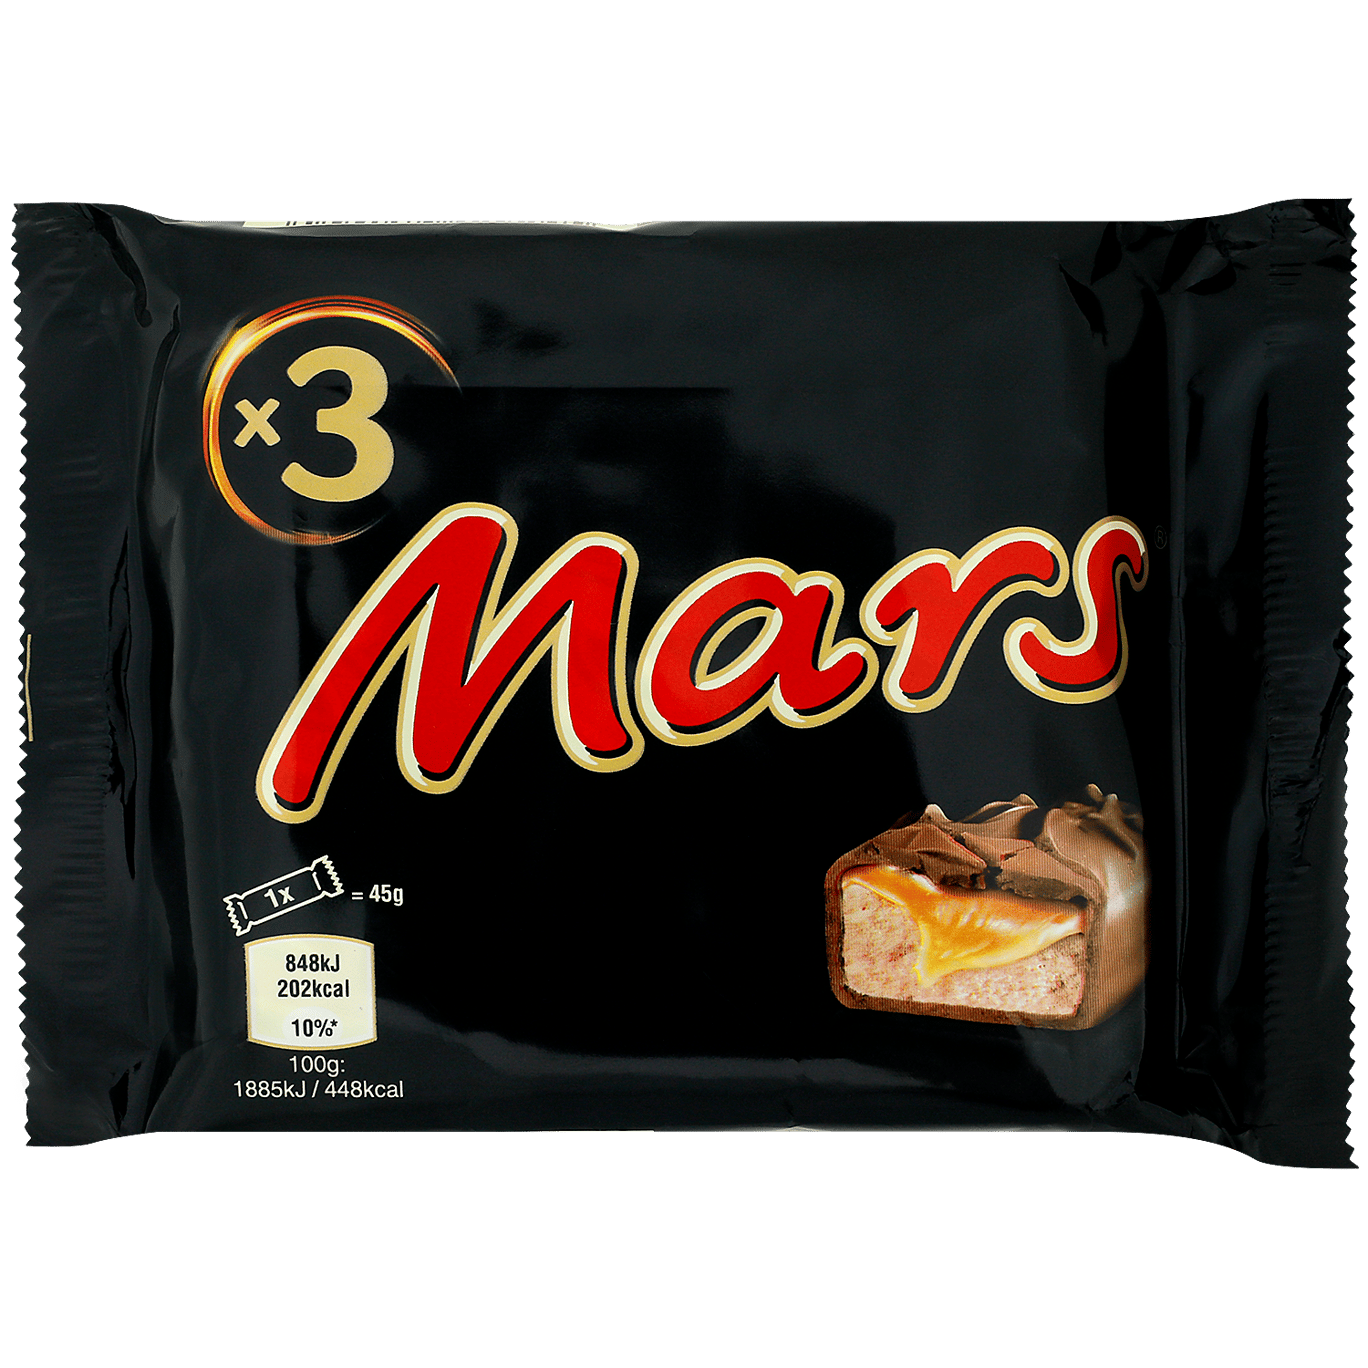 Barra de chocolate Mars